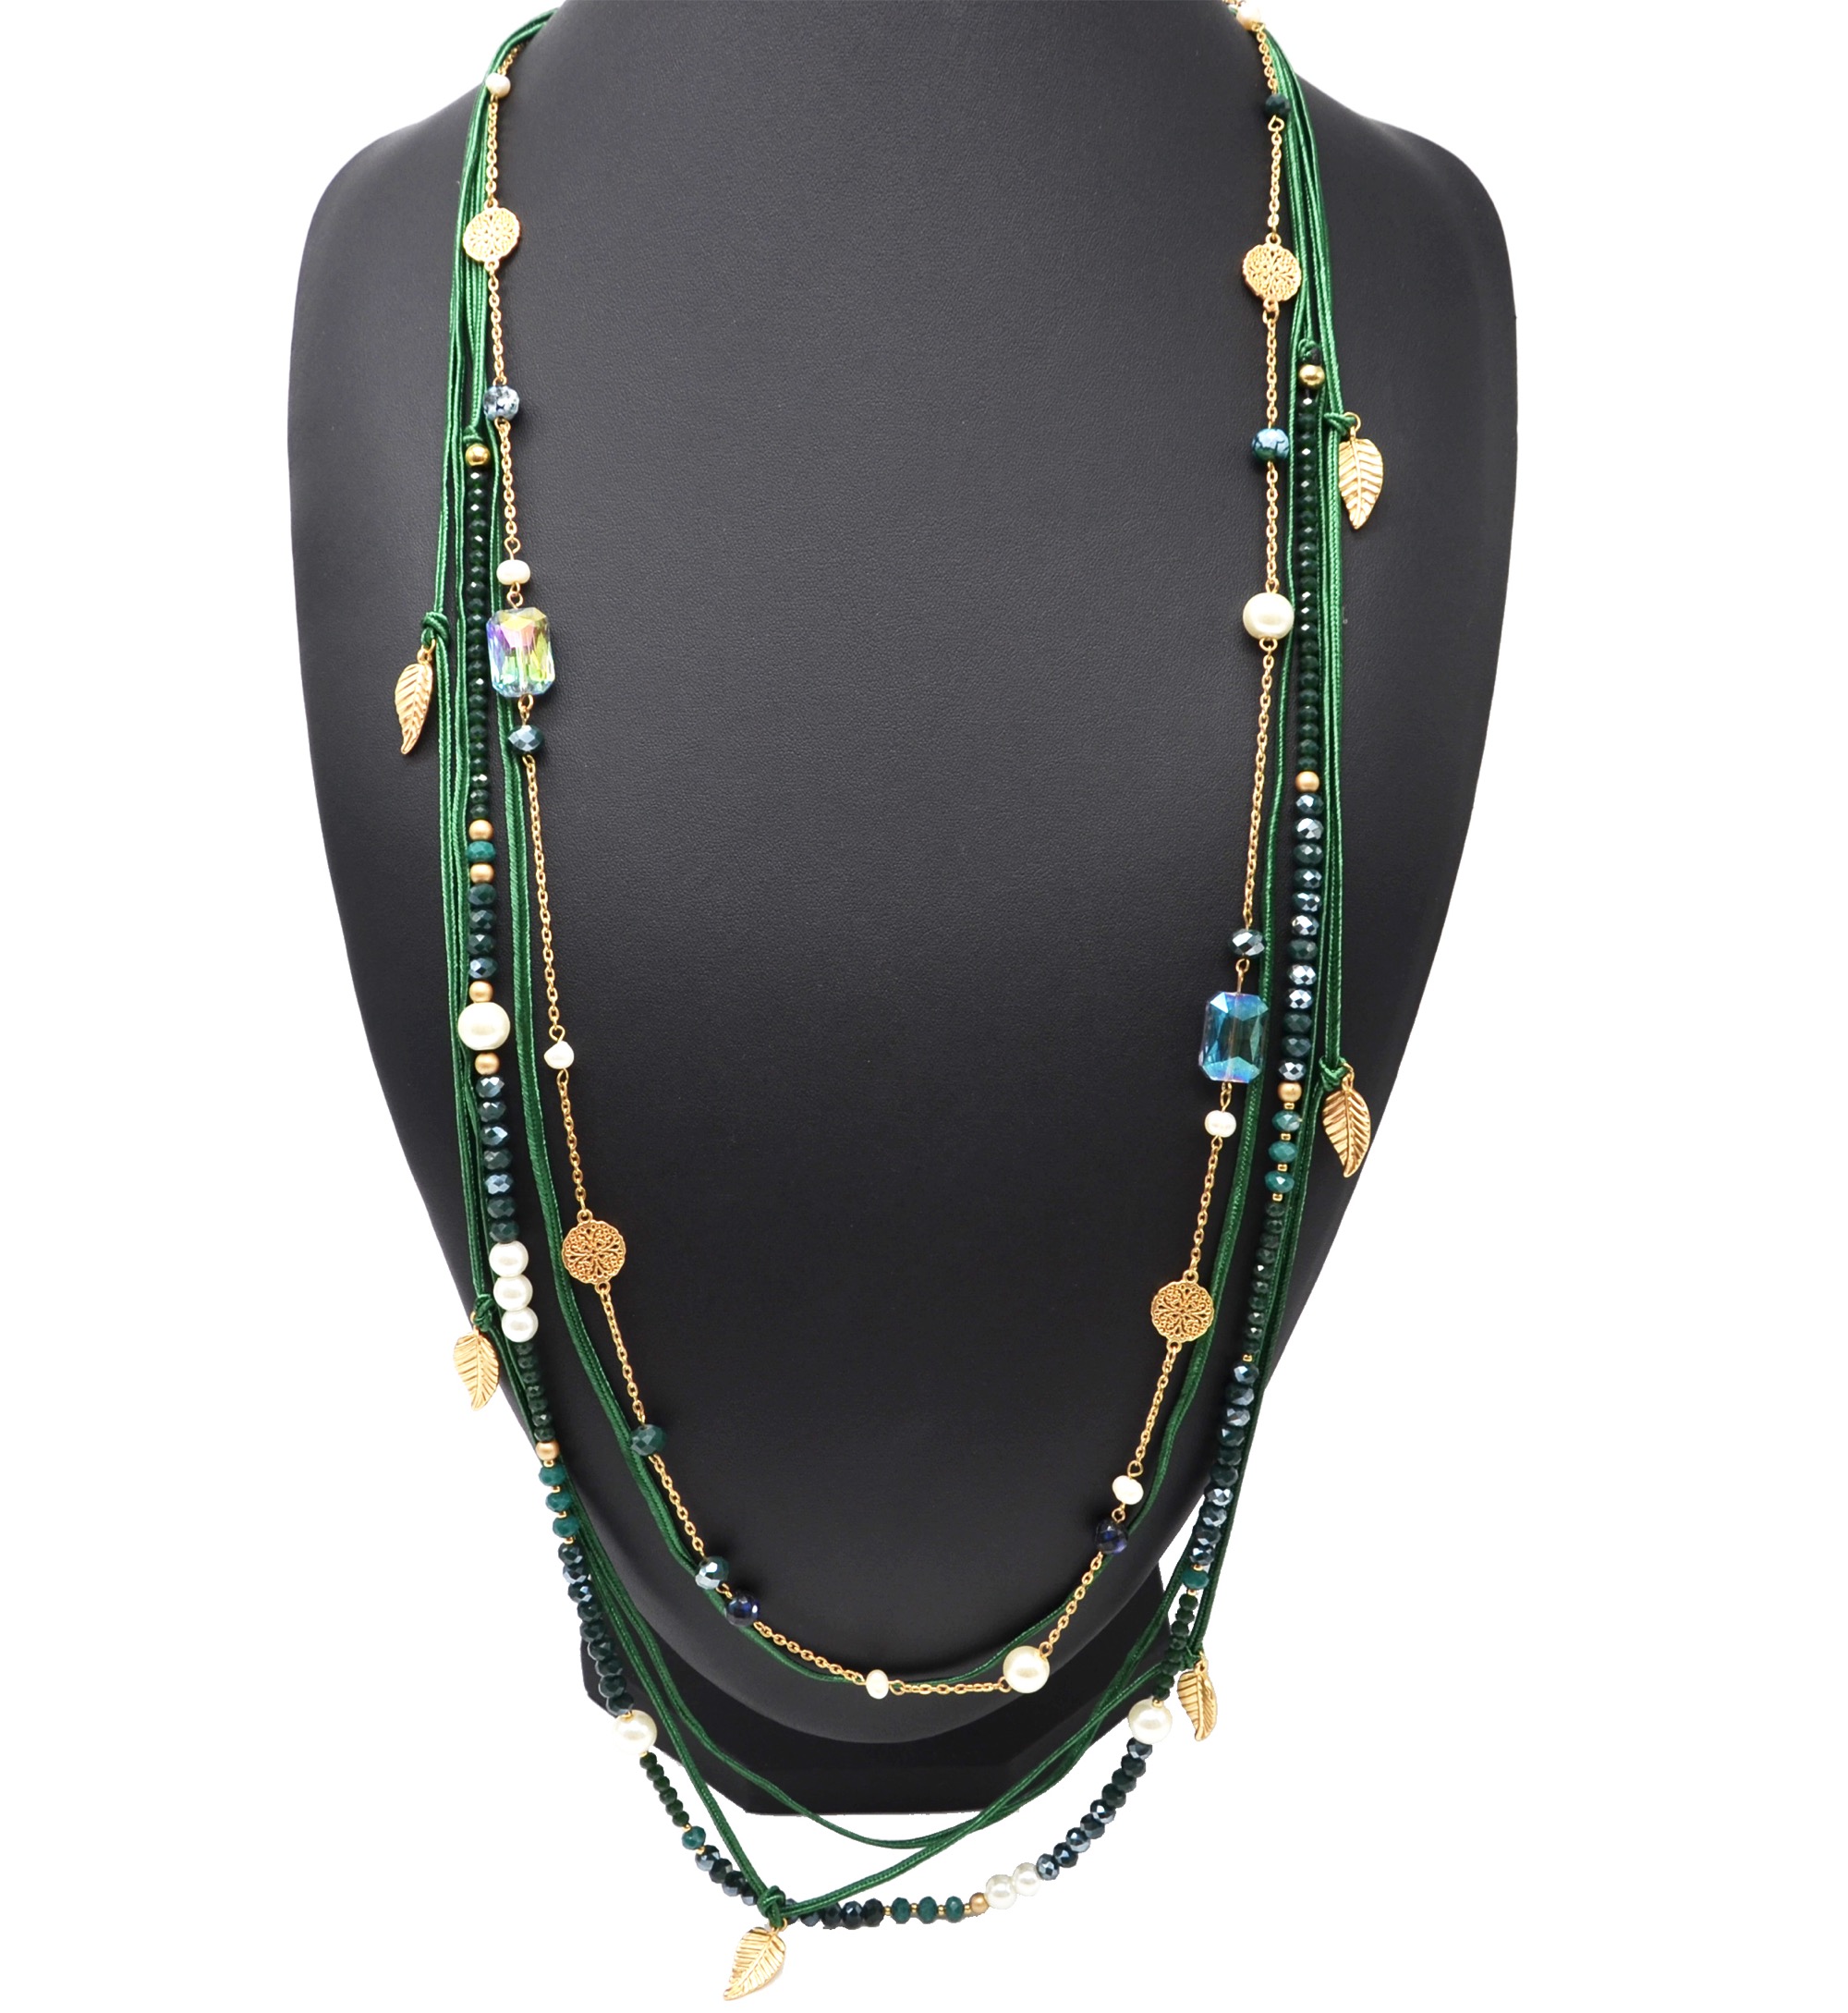 Sautoir Collier Multi-Rangs Perles Brillantes Cordons Vert avec Feu... CL2220D